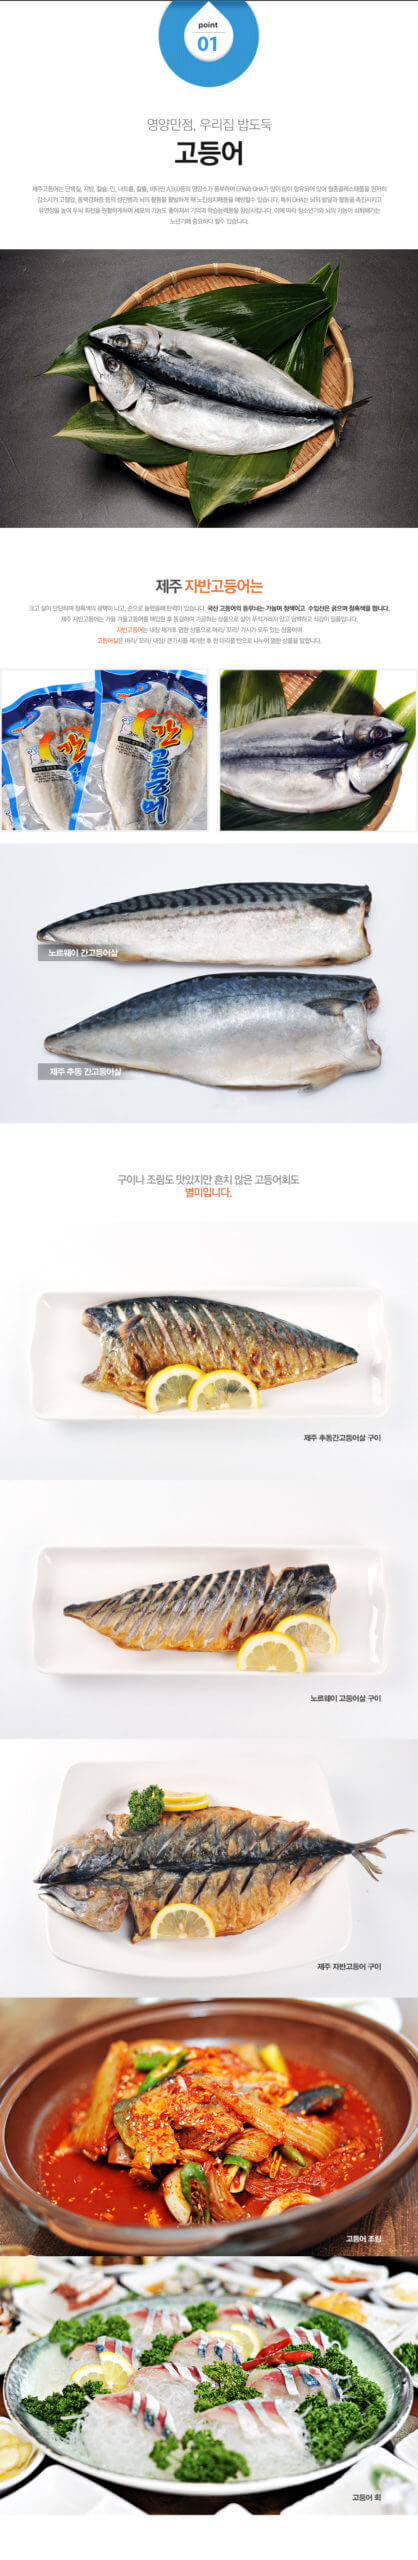 韓國食品-Jeju Mackerel more than 250g